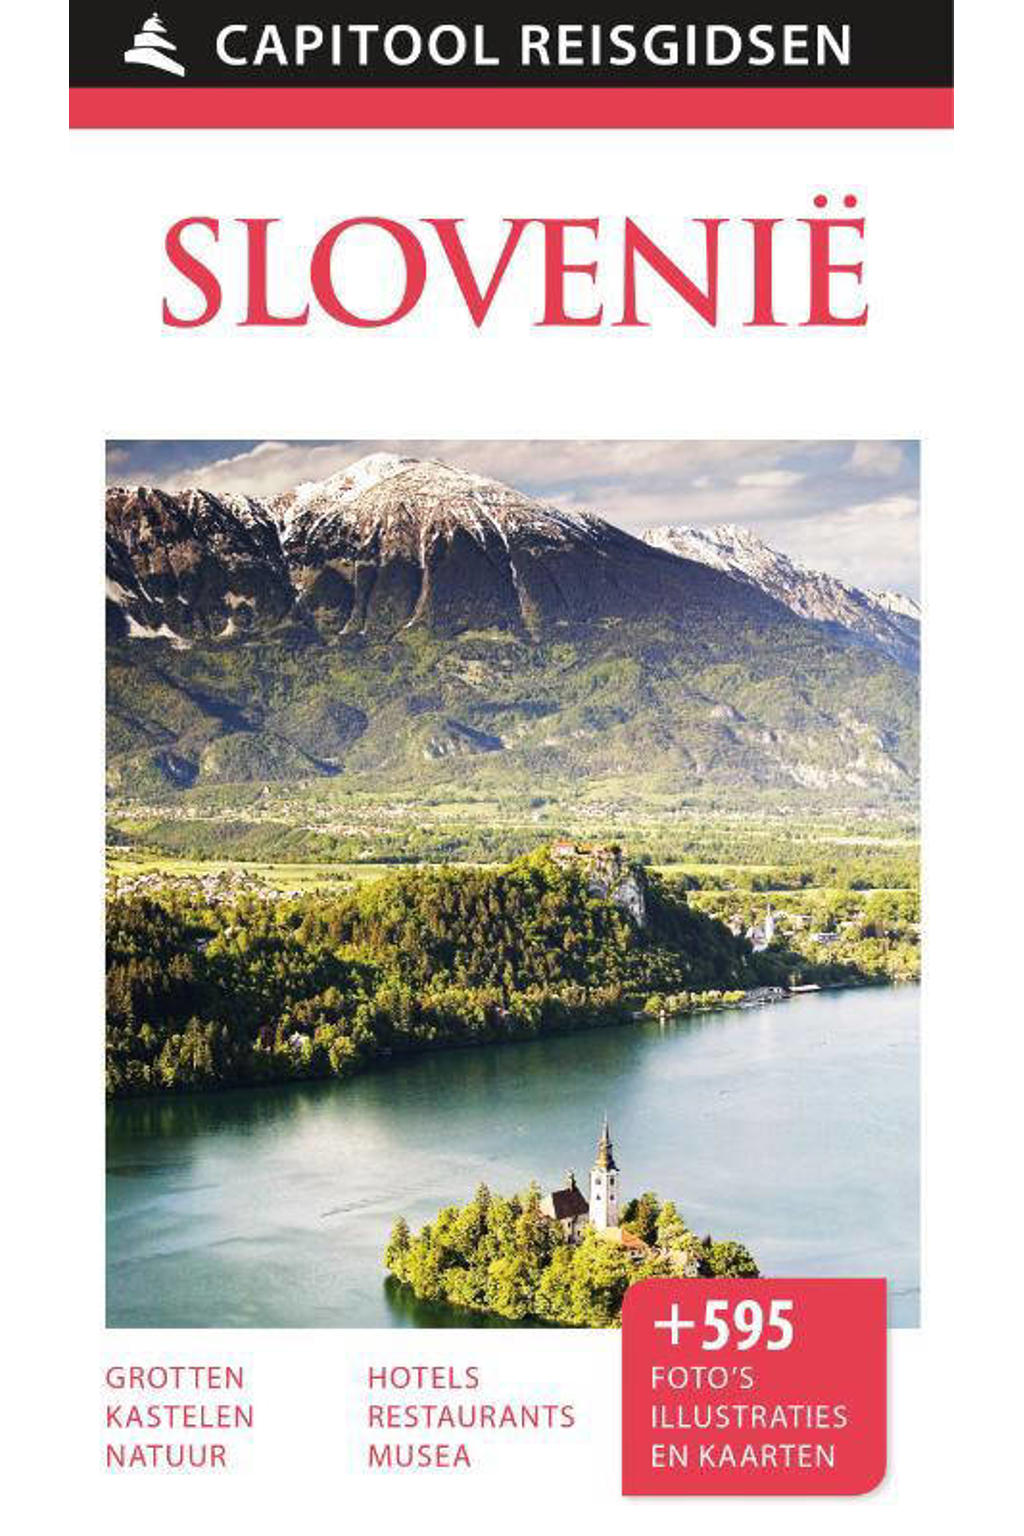 Capitool reisgidsen: Slovenië - Capitool, Jonathan Bousfield en James Stewart